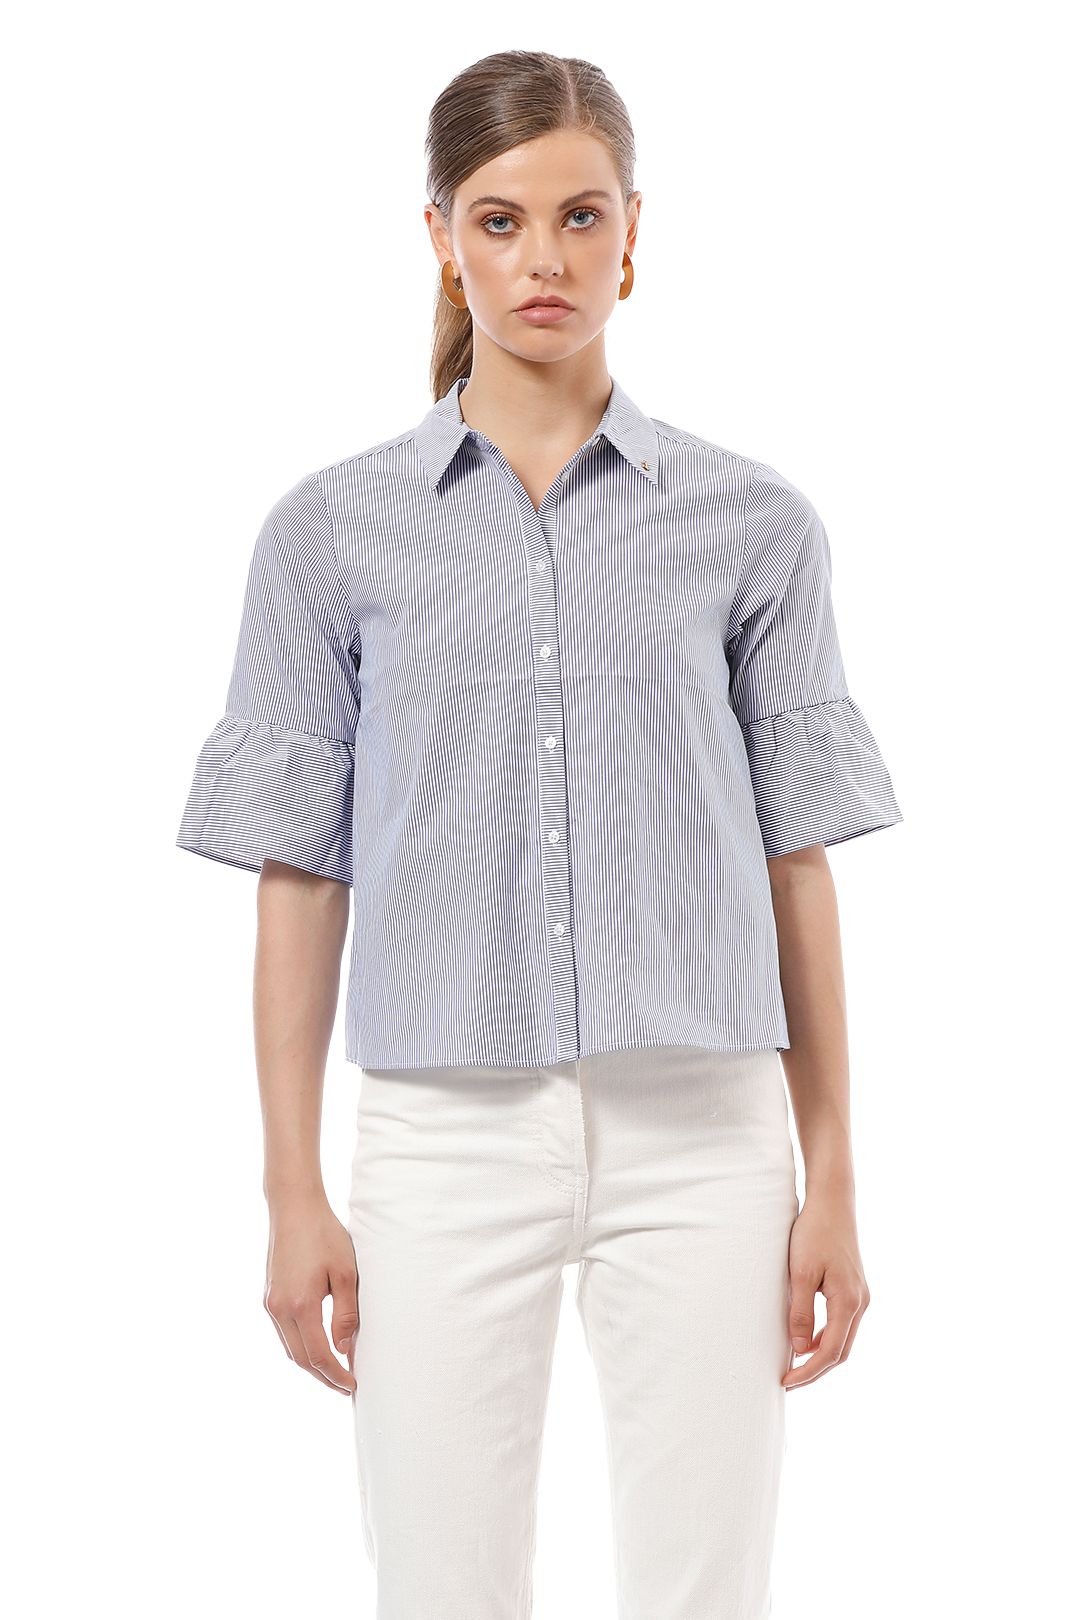 Scotch & Soda - Special Sleeve Ruffle Shirt - Stripe - Front Crop